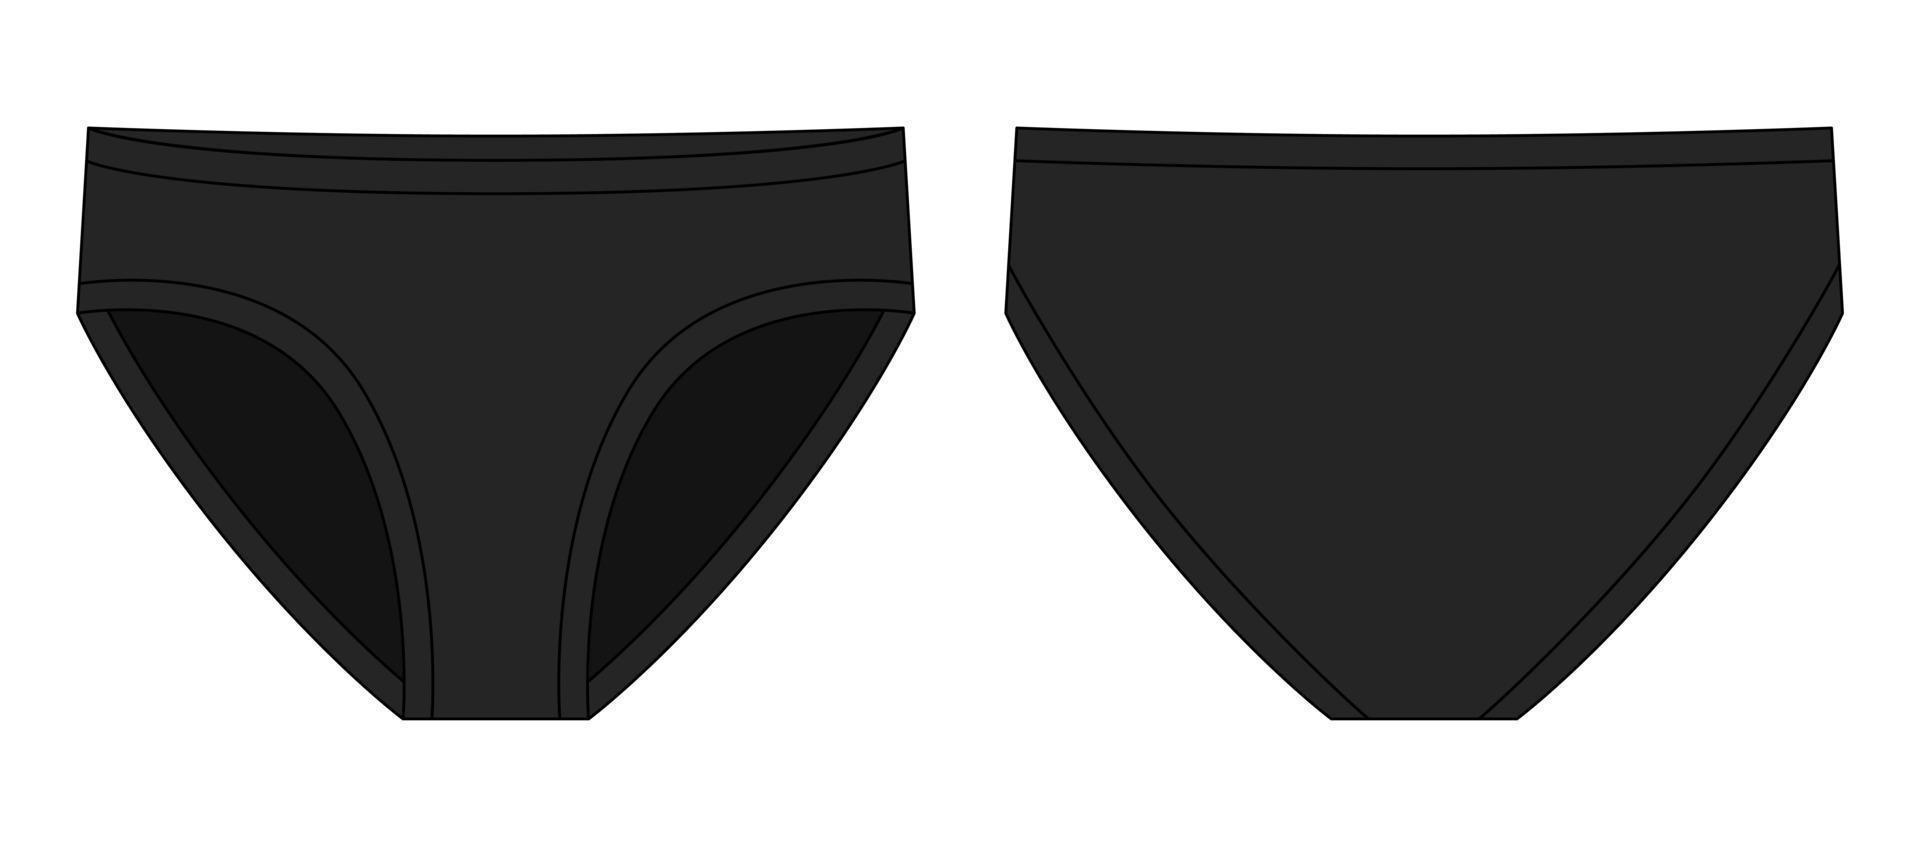 Girls knickers technical sketch illustration. Black color. Children's underpants. vector